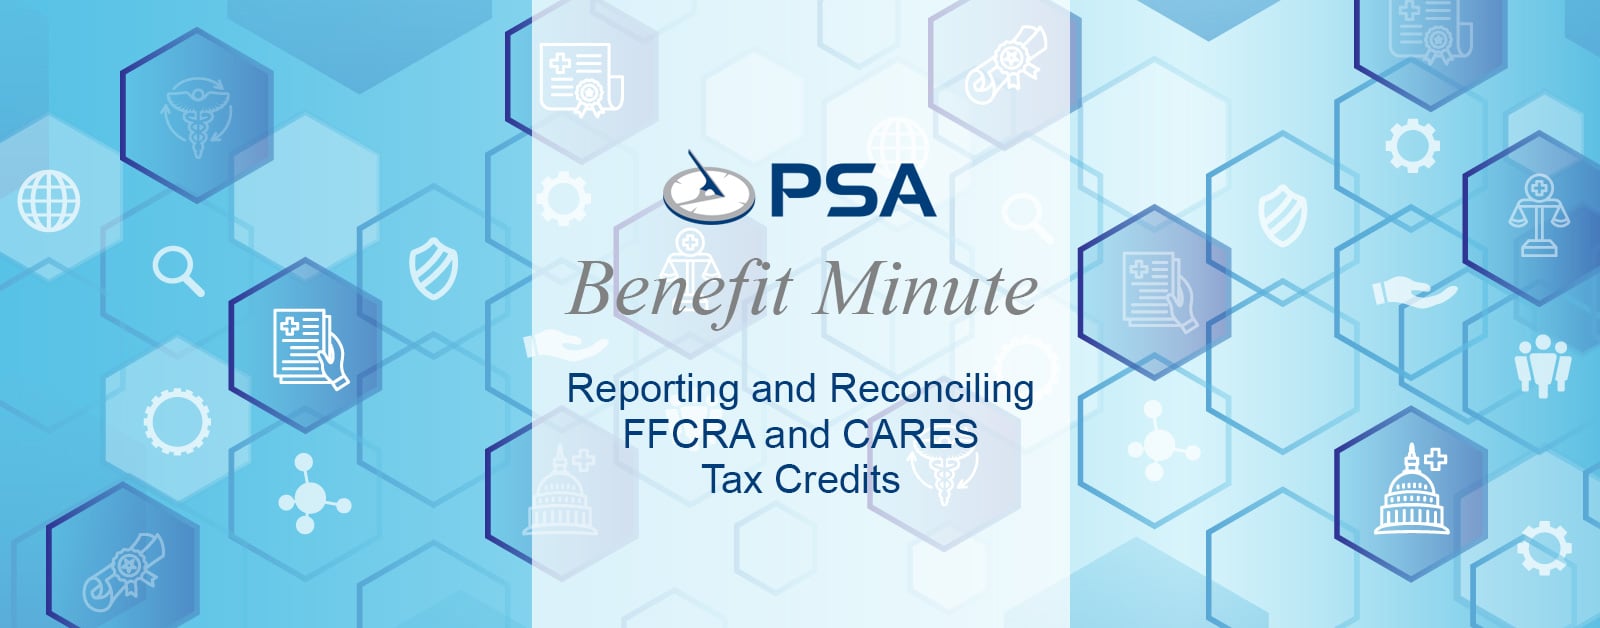 PSA Benefit Minute image on PSA Financial's website